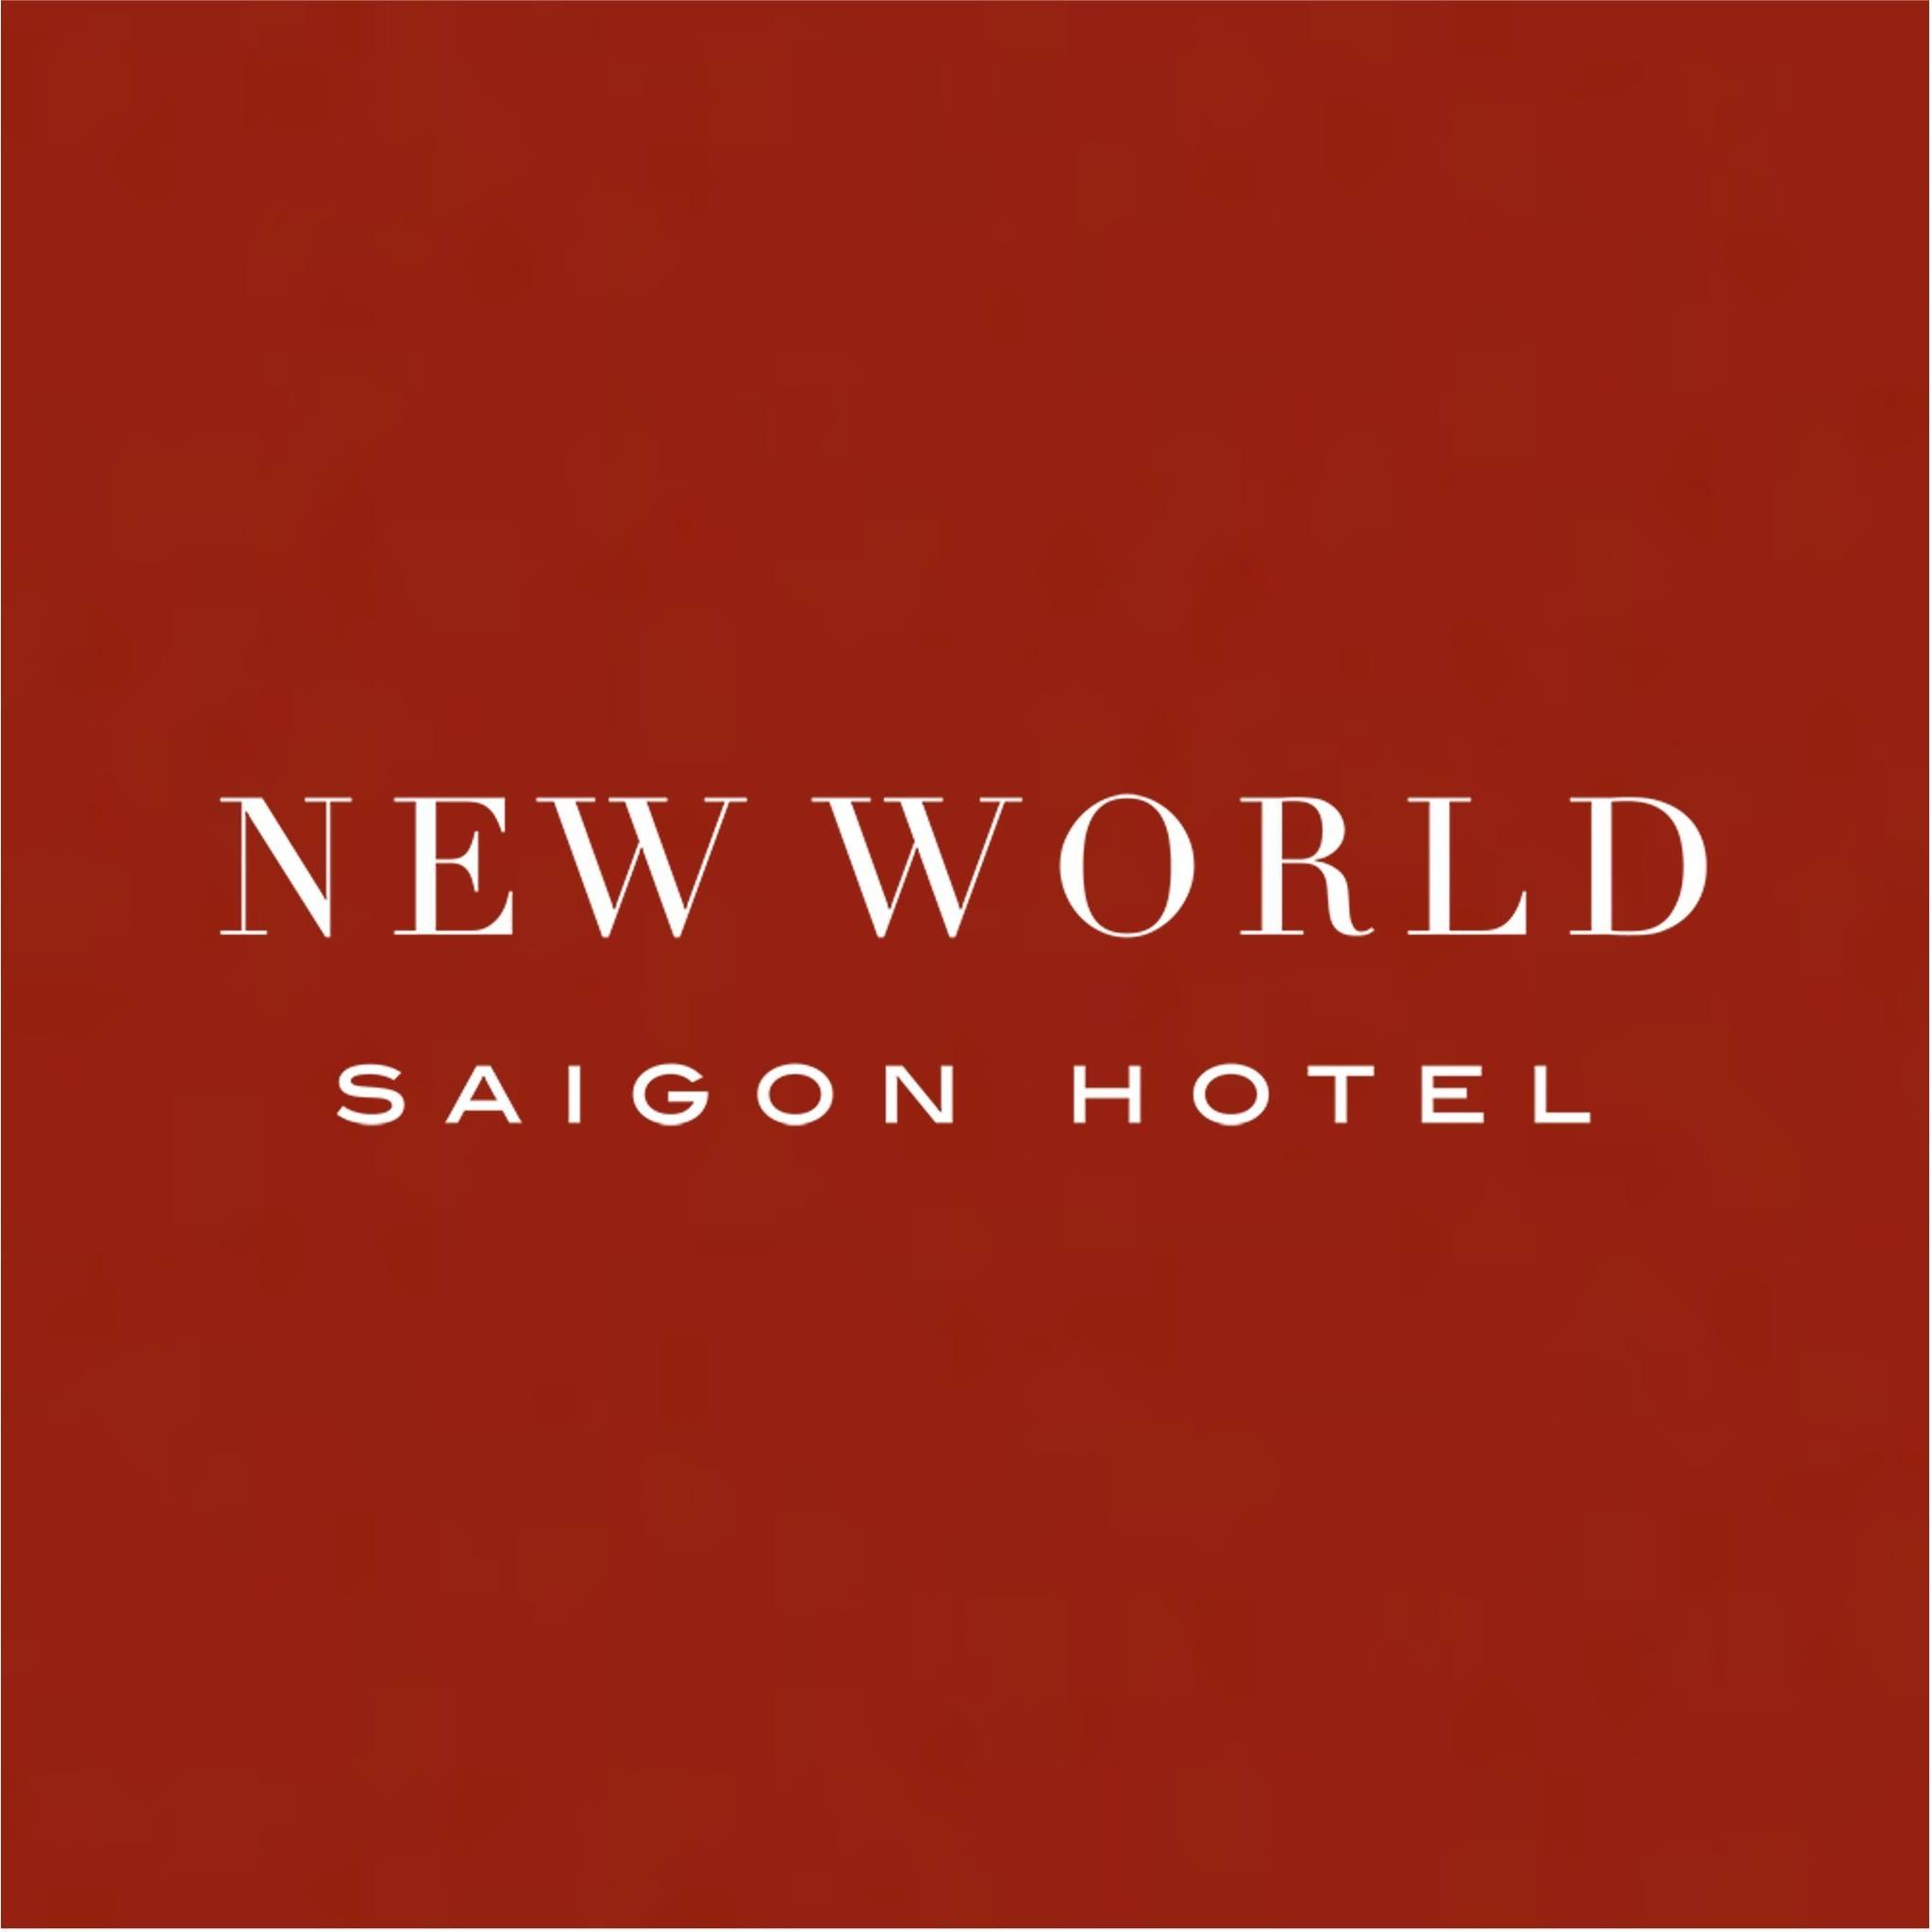 New World Saigon Hotel 